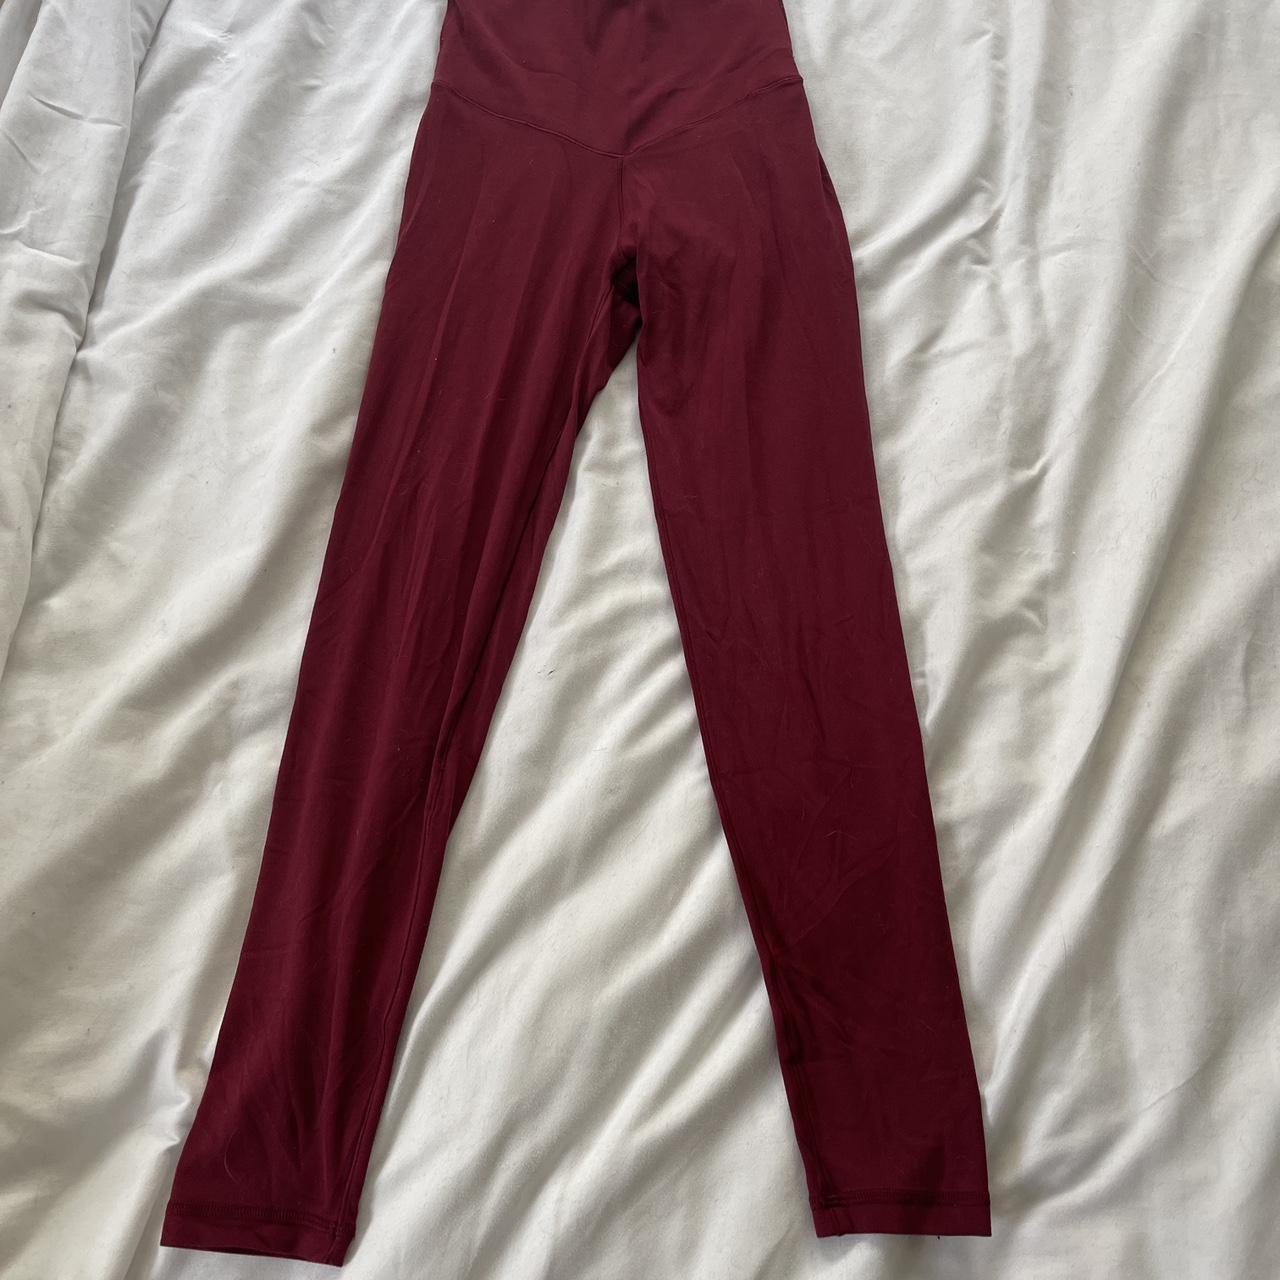 Aerie leggings, Size: XS Short, Color: Dark red